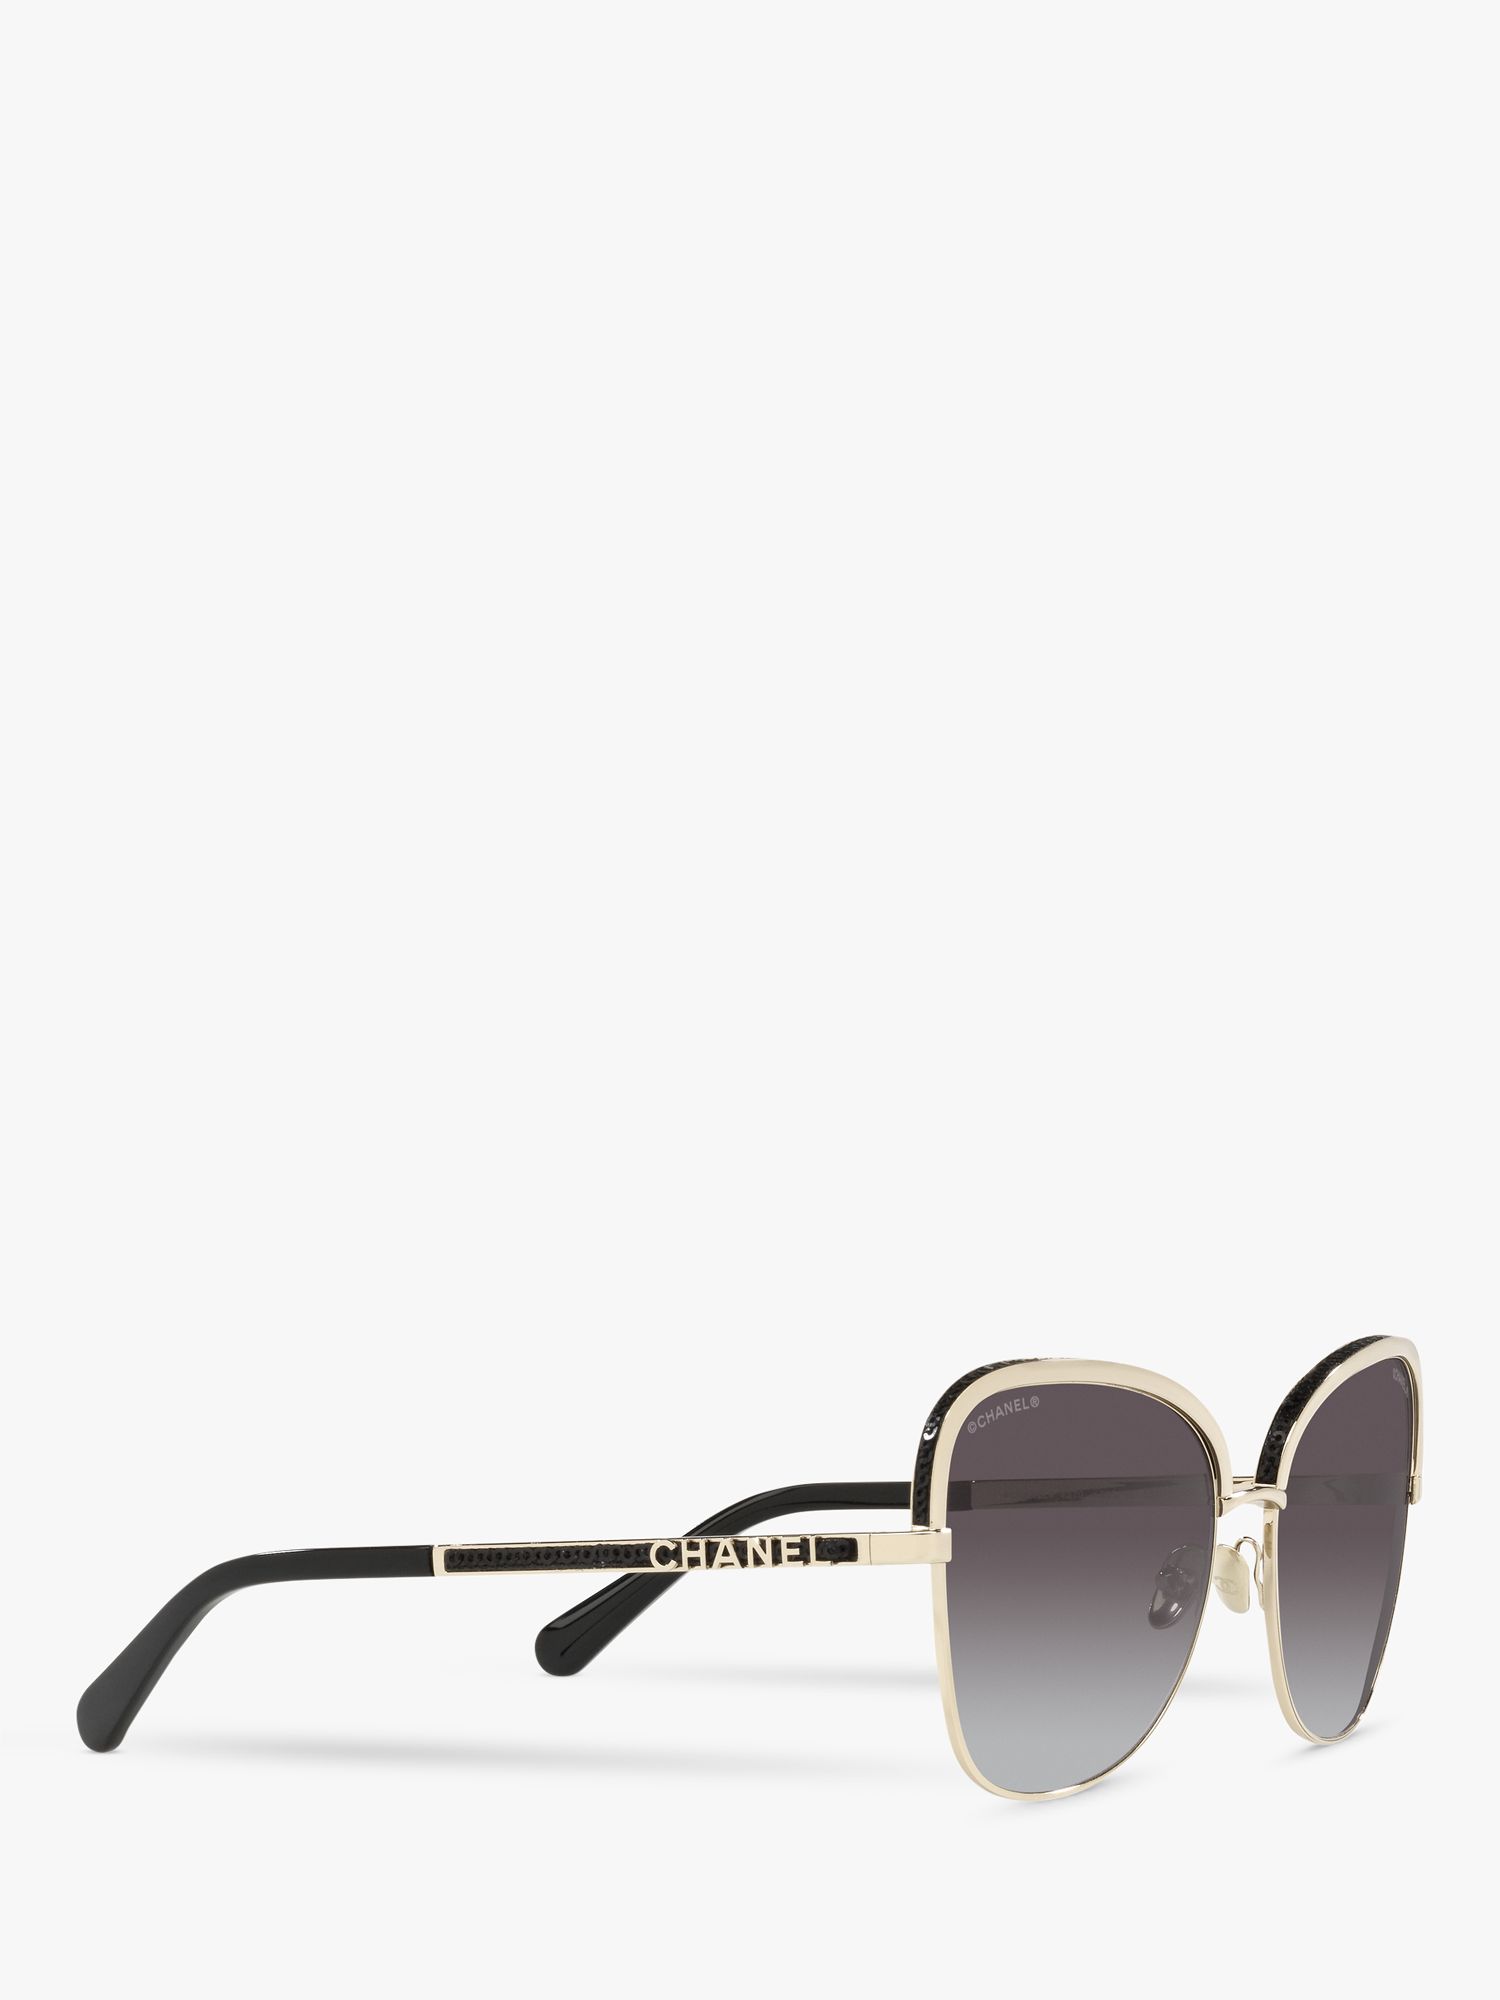 CHANEL Irregular Sunglasses CH4270 Gold/Black Gradient at John